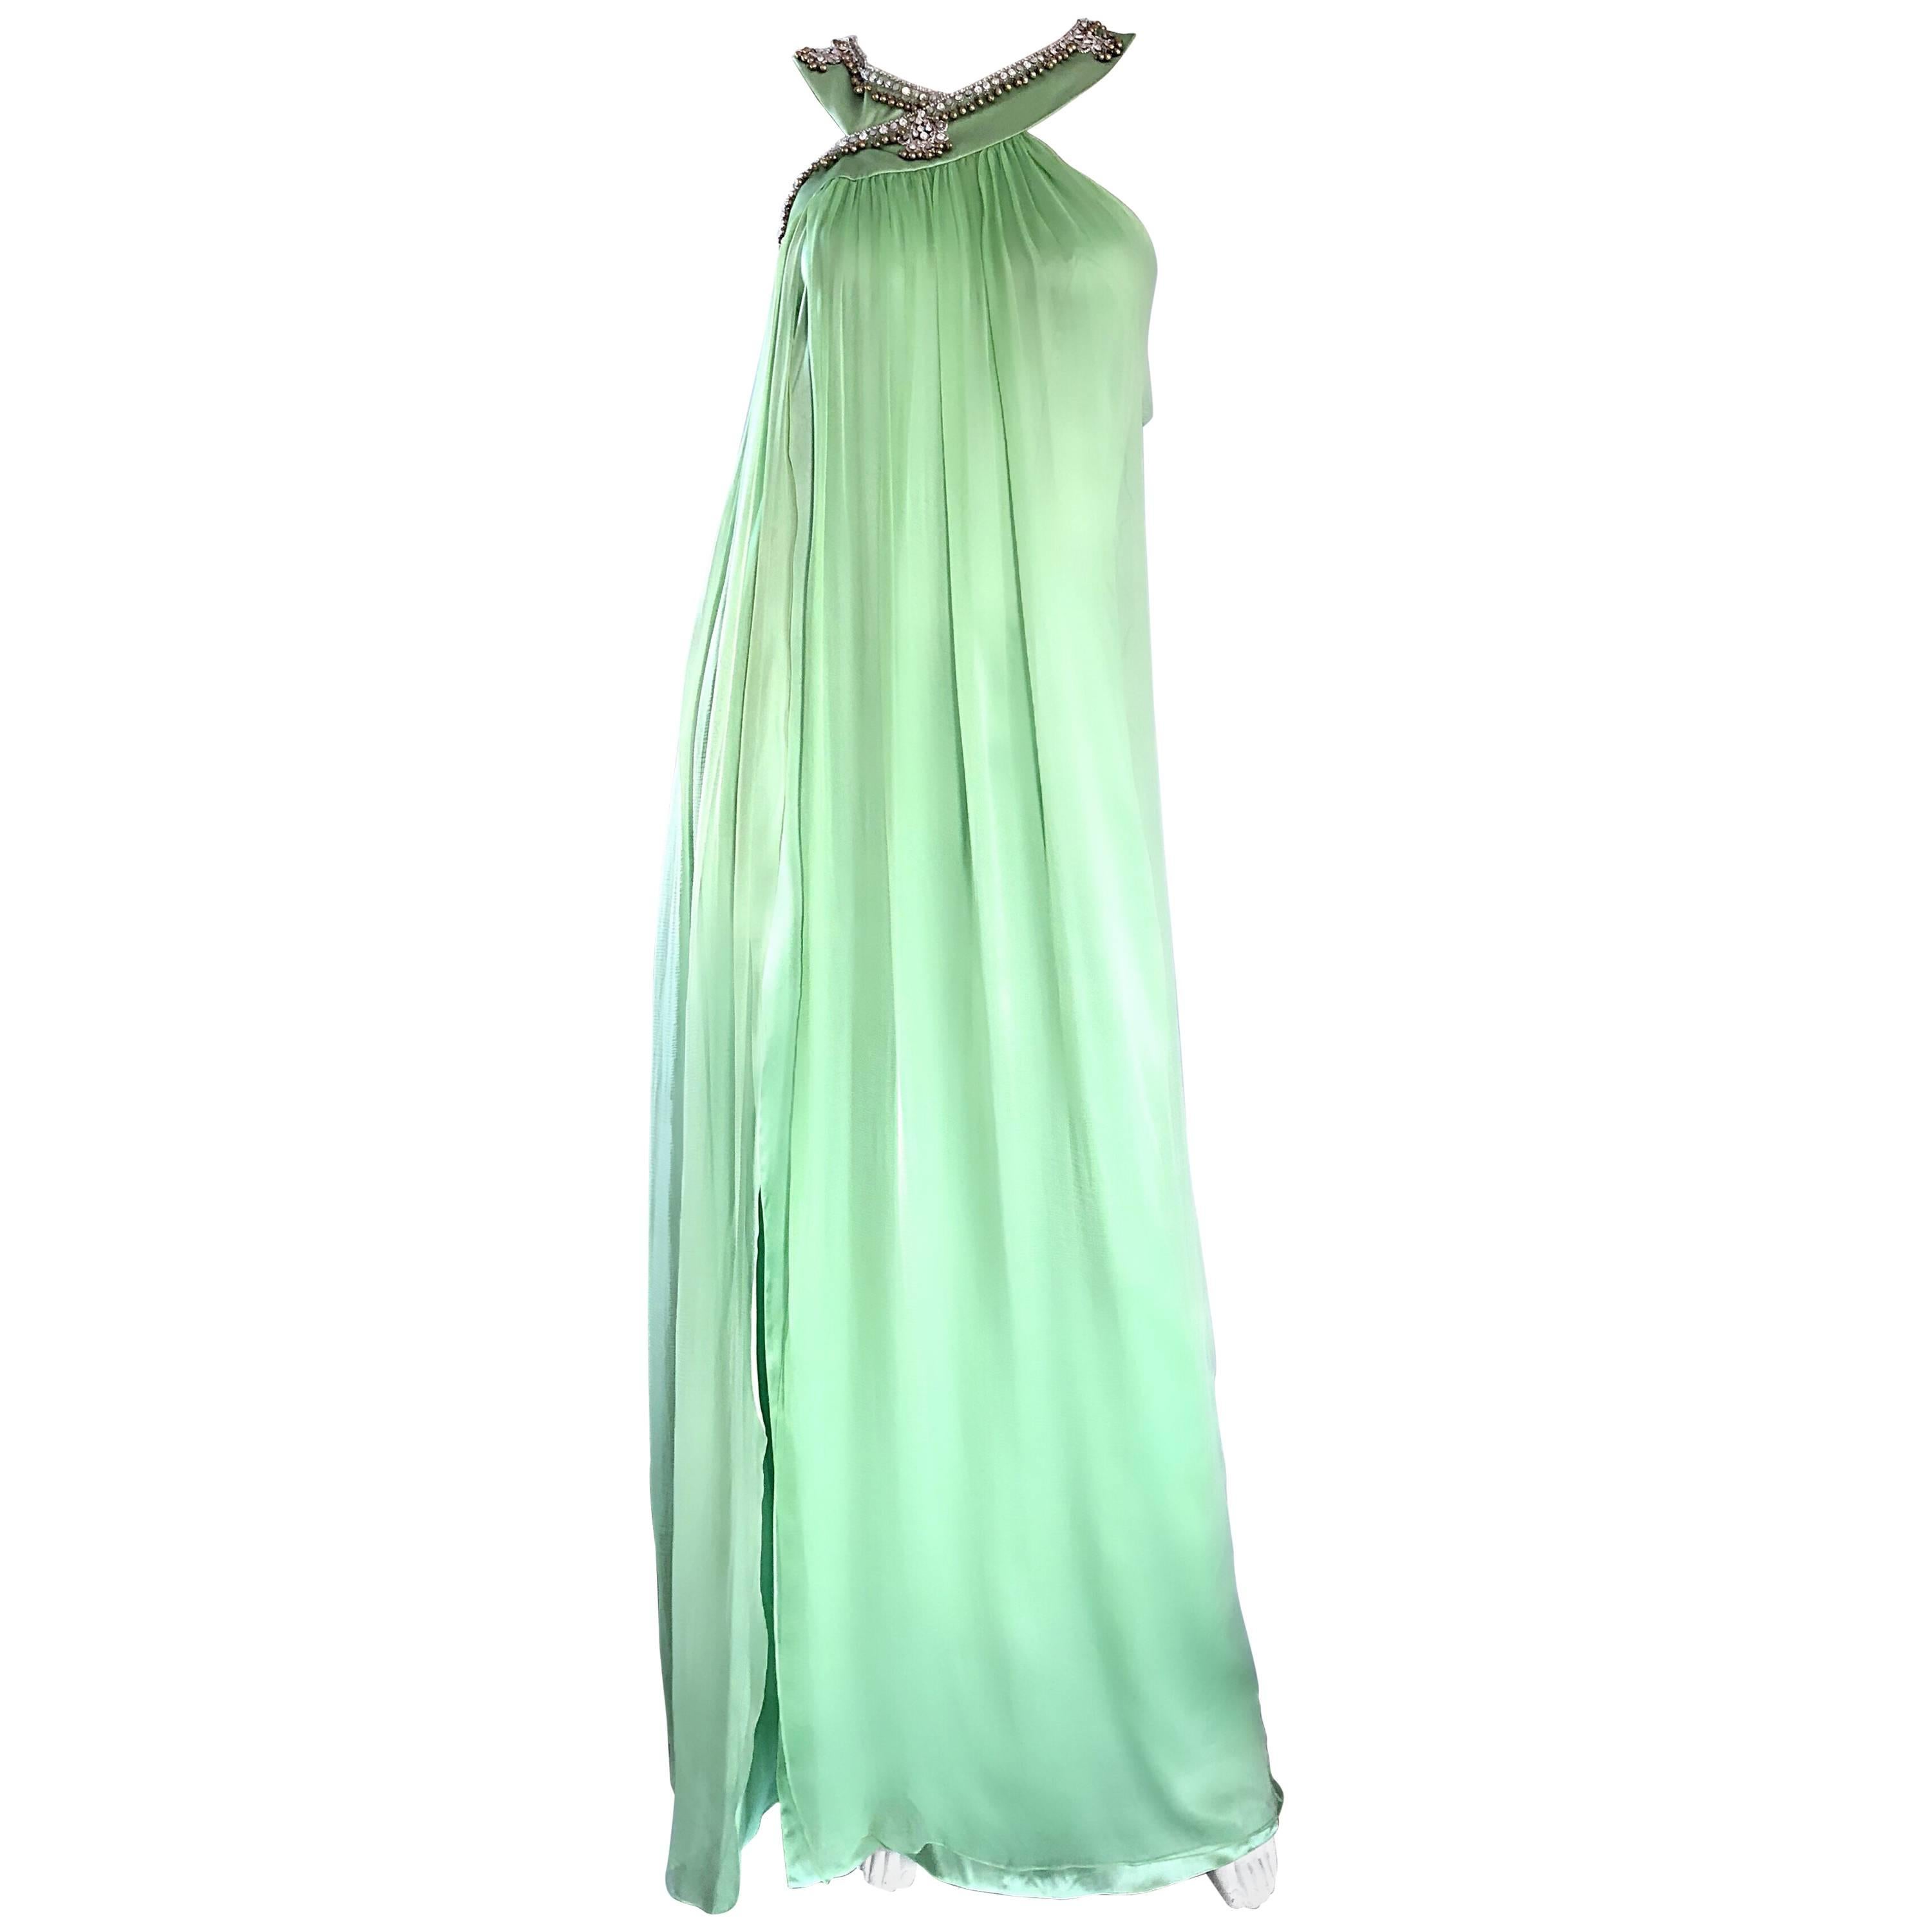 New Christian Dior John Galliano Size 10 Light Green Silk Chiffon Grecian Gown